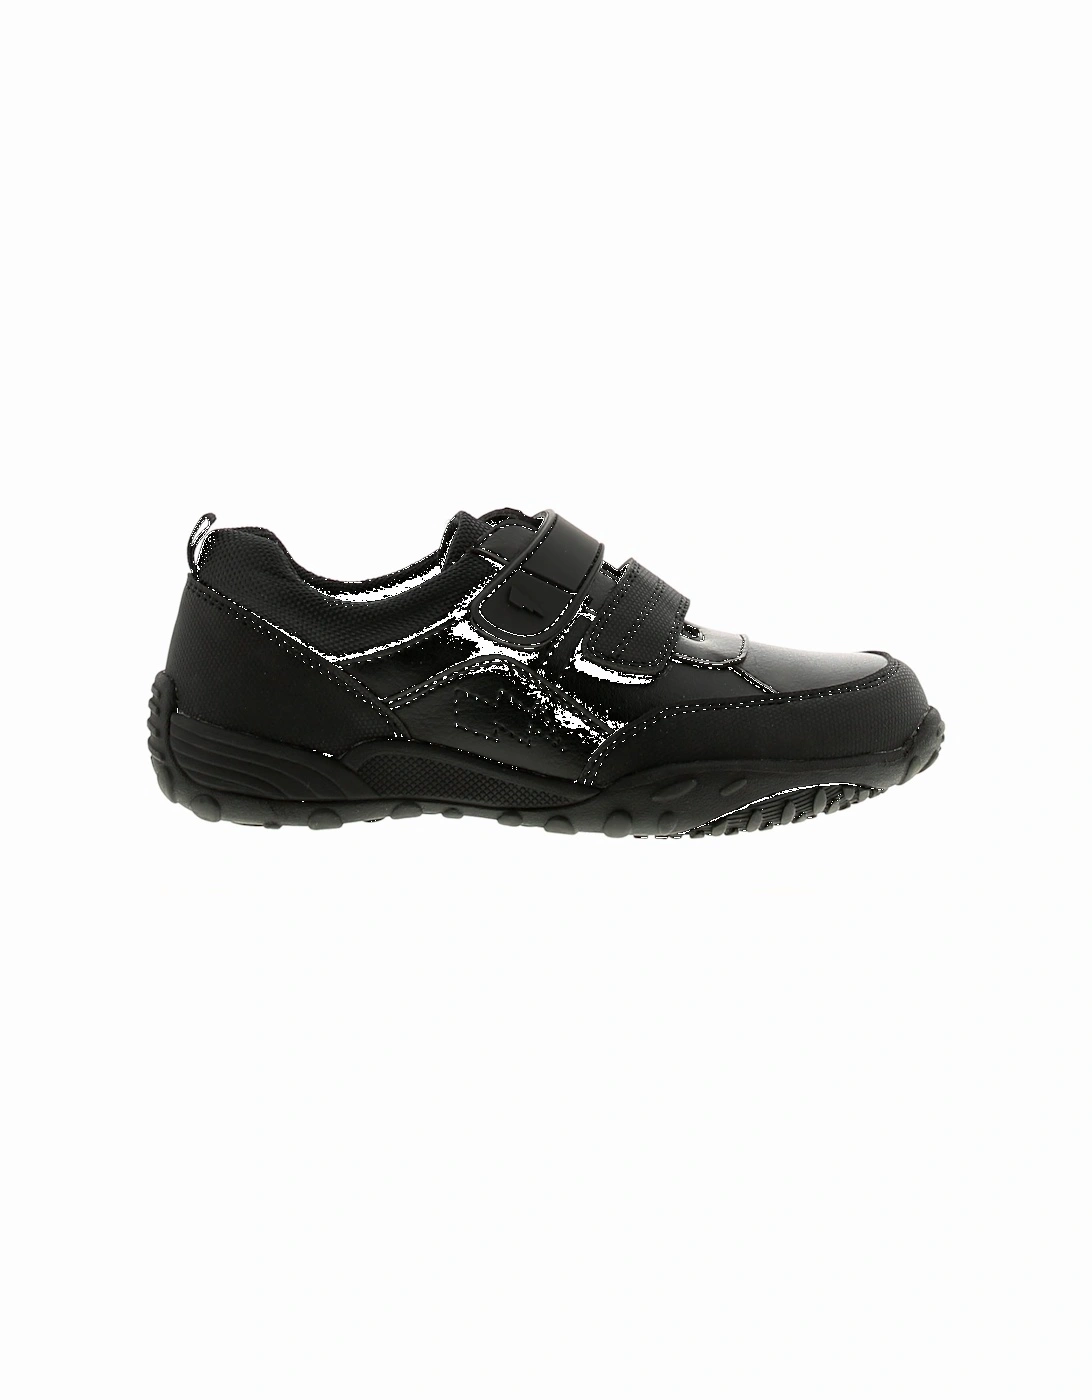 Boys School Shoes Blast Touch Fastening black UK Size